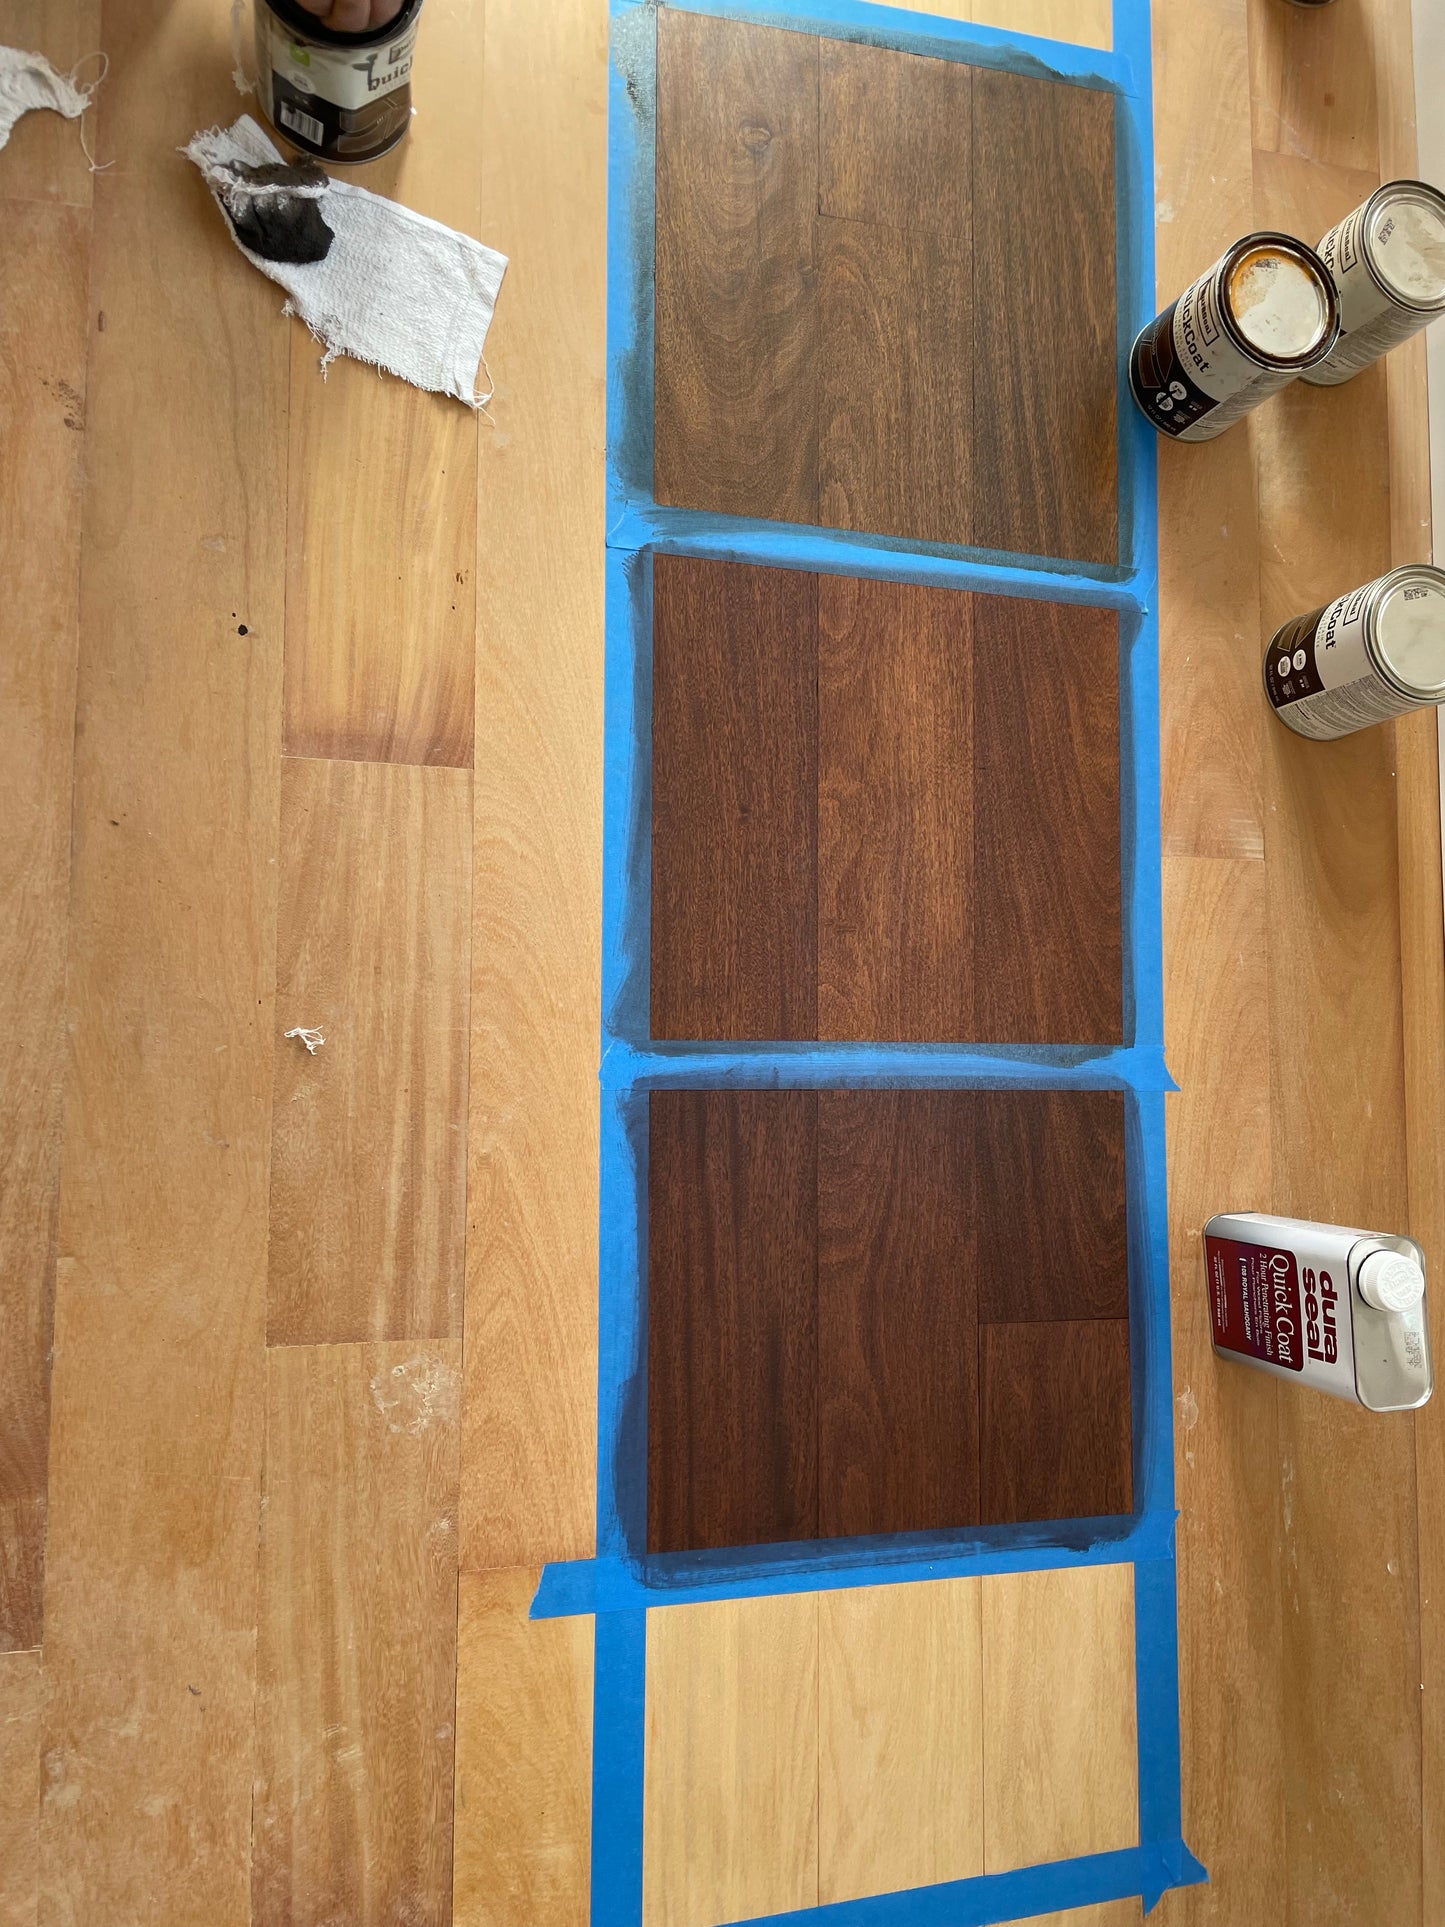 3 1/4" x 3/4" Unfinished Garapa Hardwood Flooring